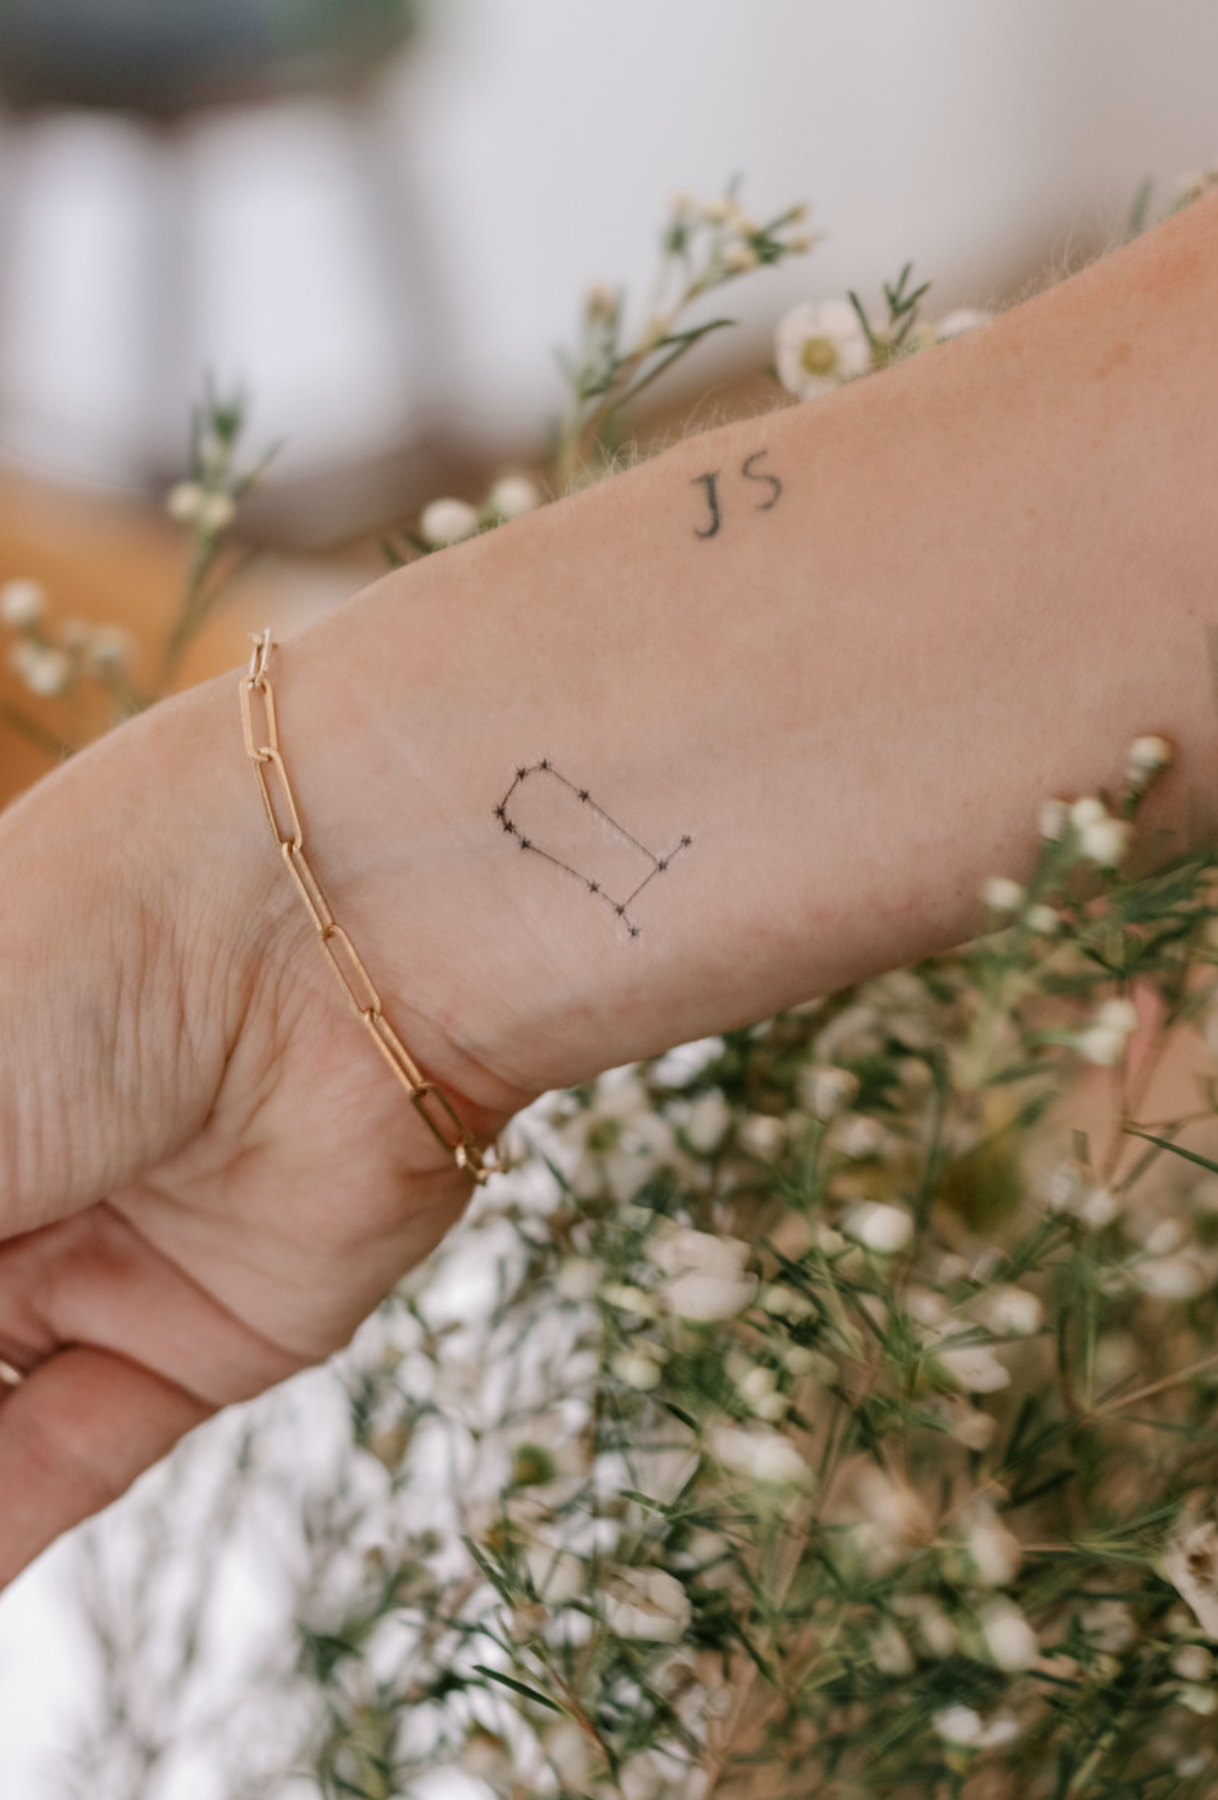 Zodiac Constellation Temporary Tattoos